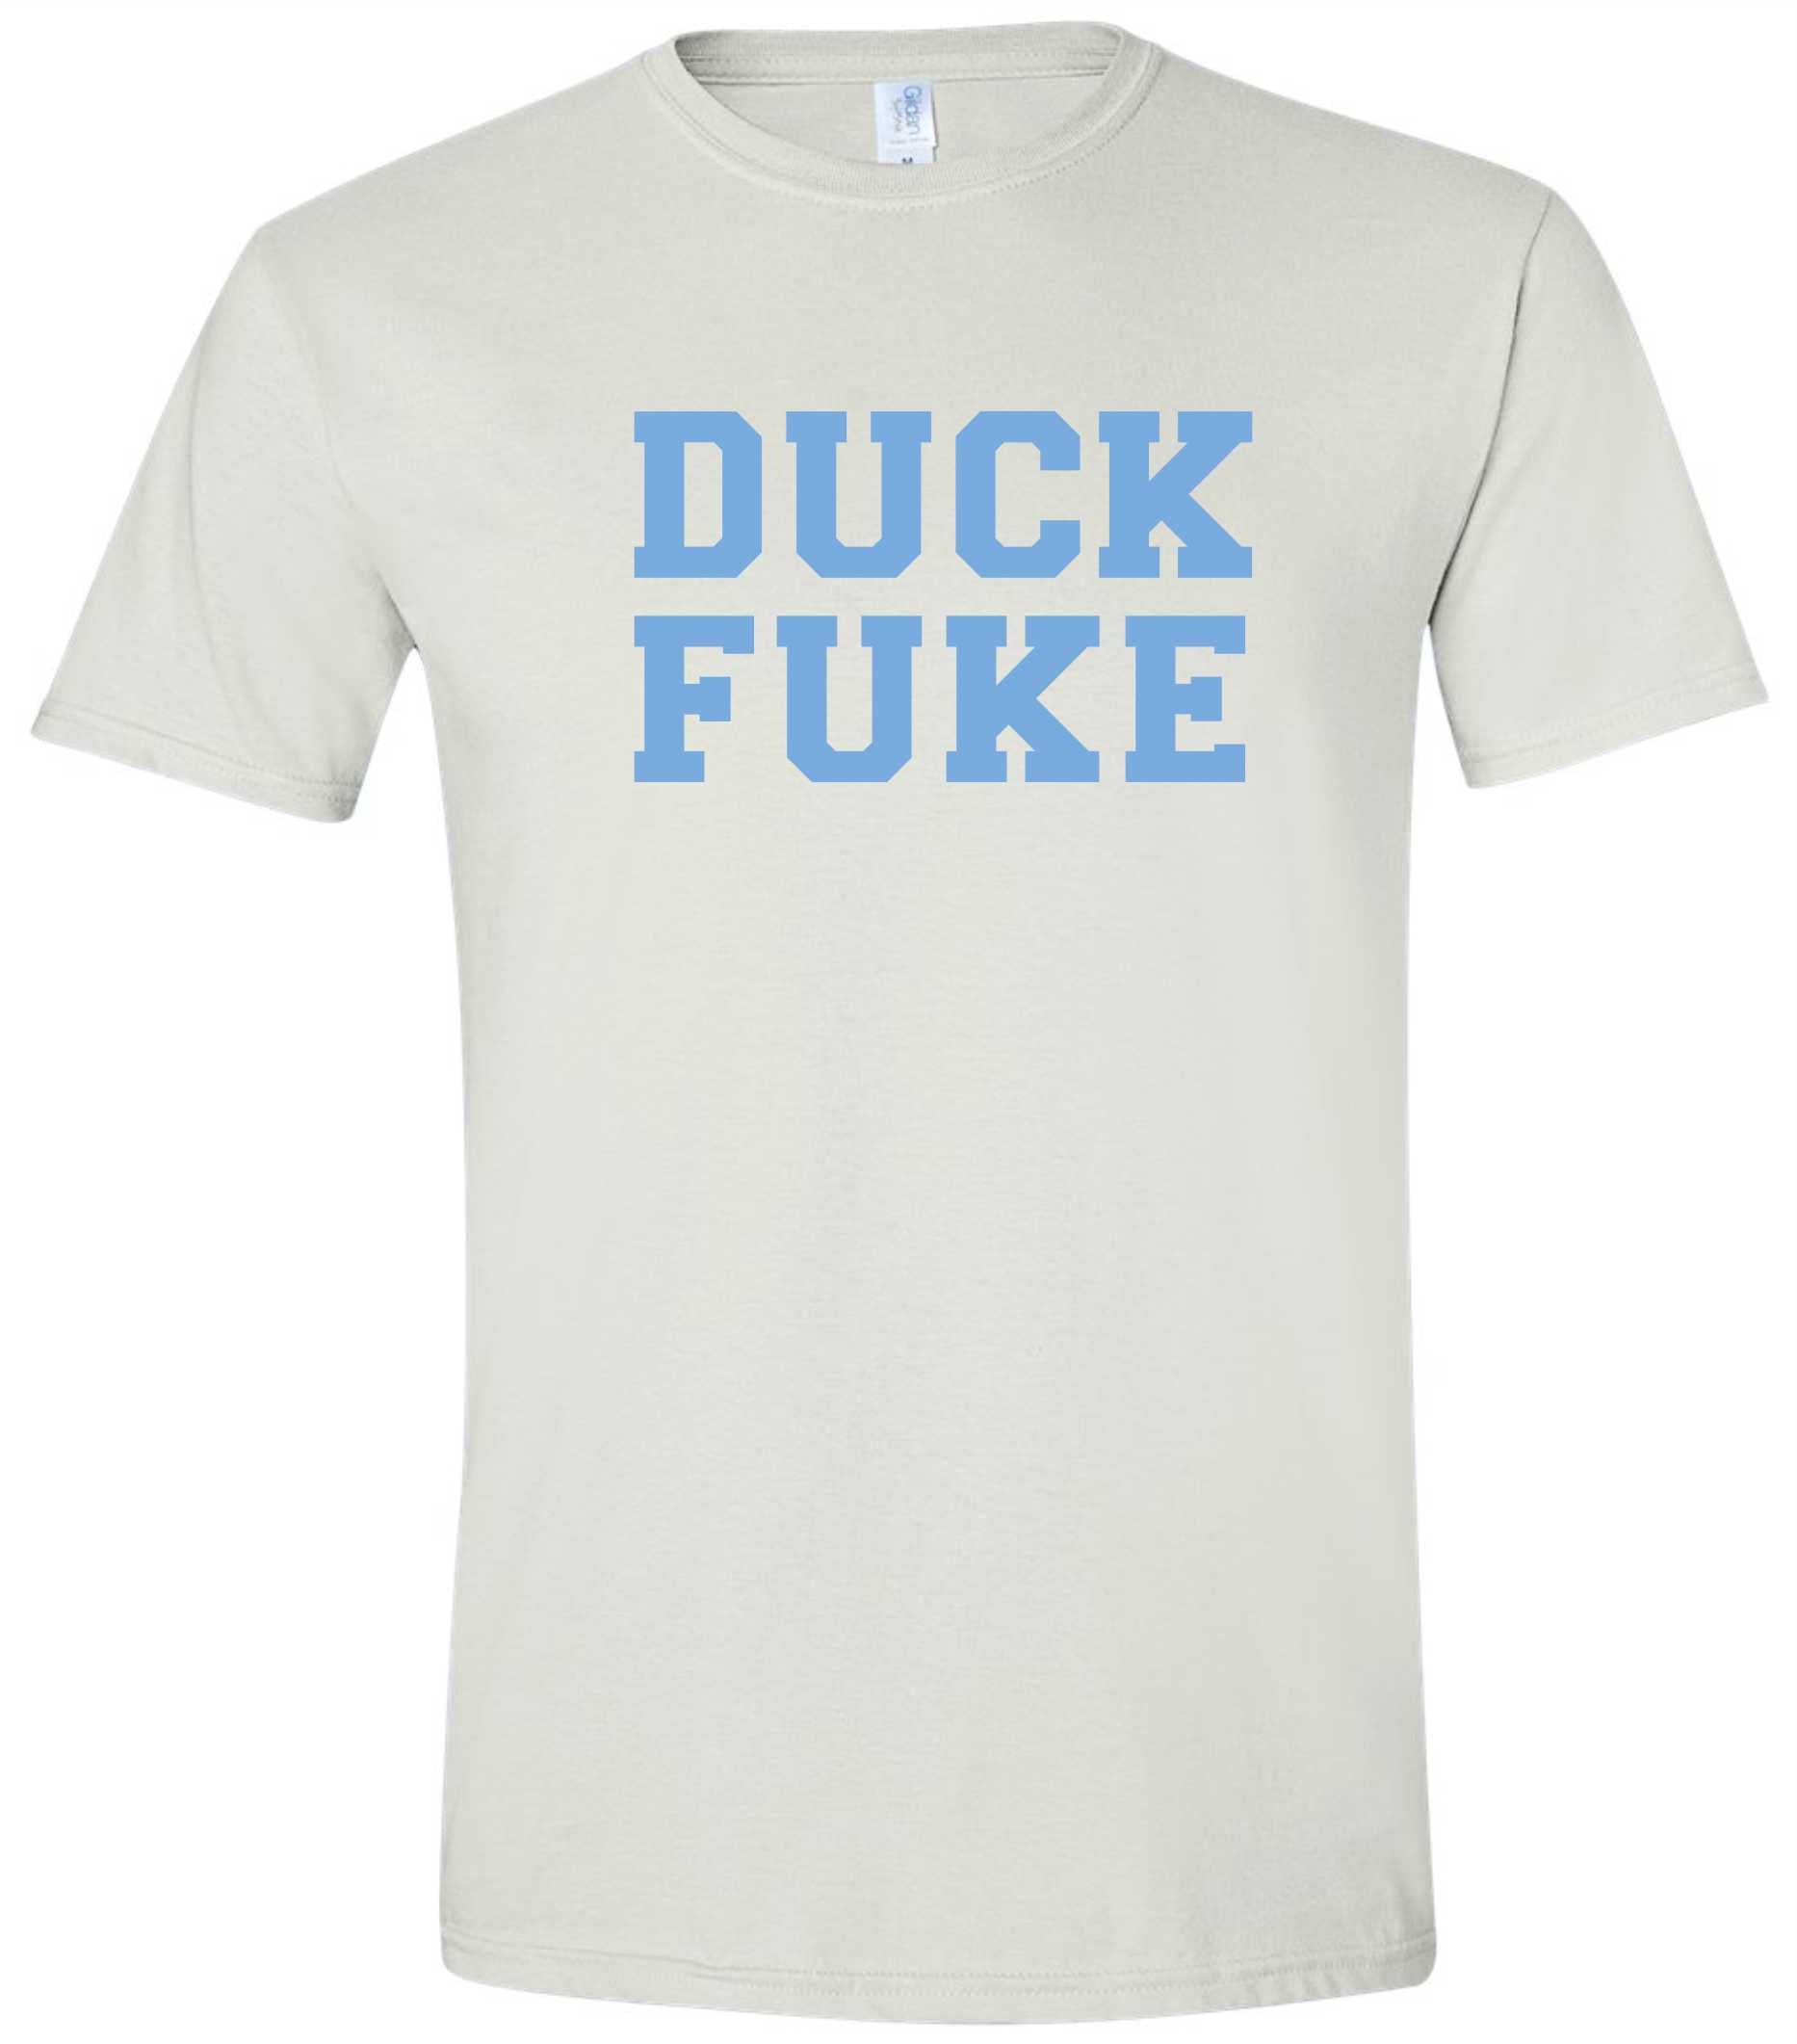 Duck Fuke T-Shirt